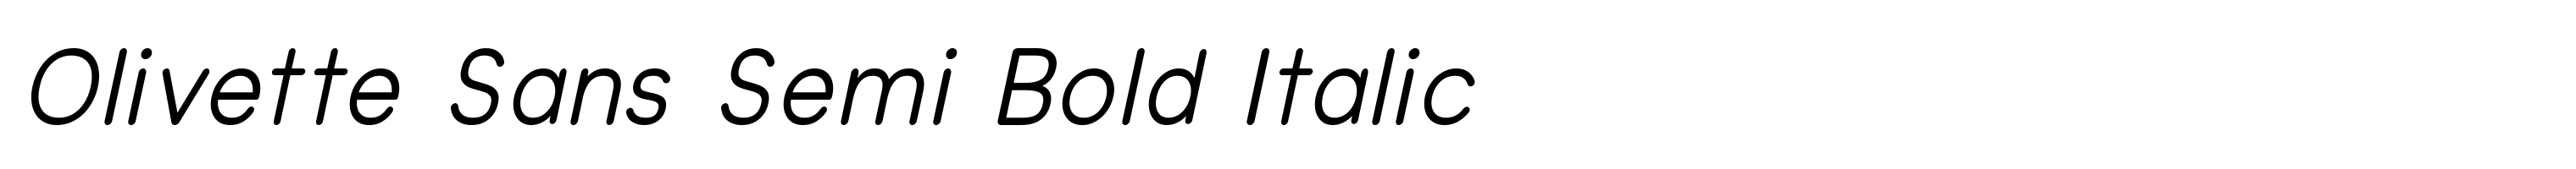 Olivette Sans Semi Bold Italic